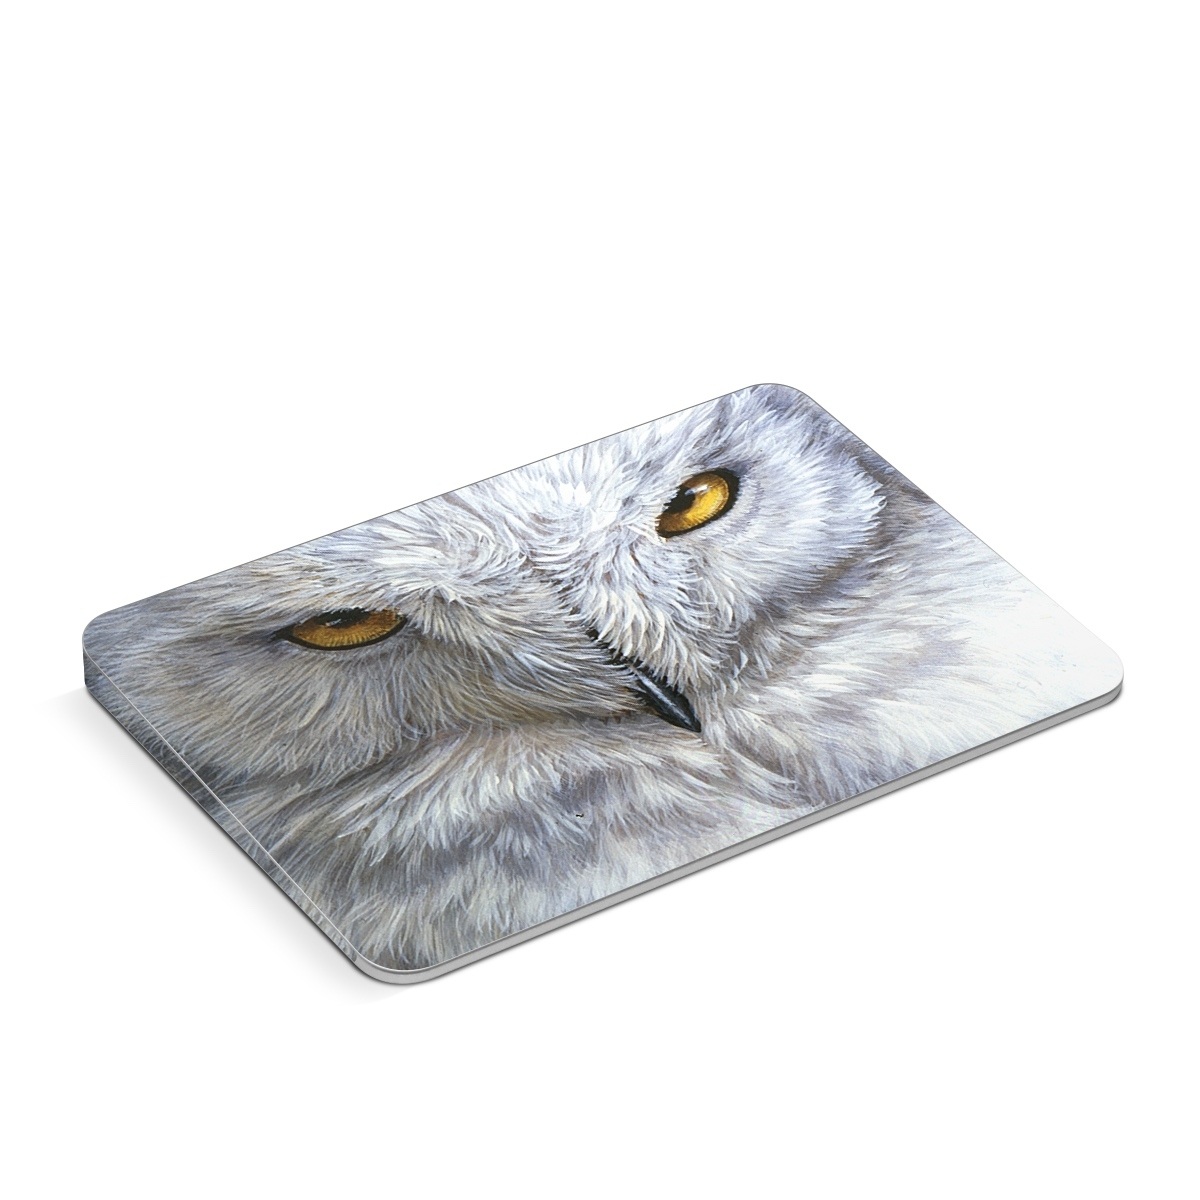 Apple Magic Trackpad Skin design of Owl, Bird, Bird of prey, Snowy owl, great grey owl, Close-up, Eye, Snout, Wildlife, Eastern Screech owl, with gray, white, black, blue, purple colors